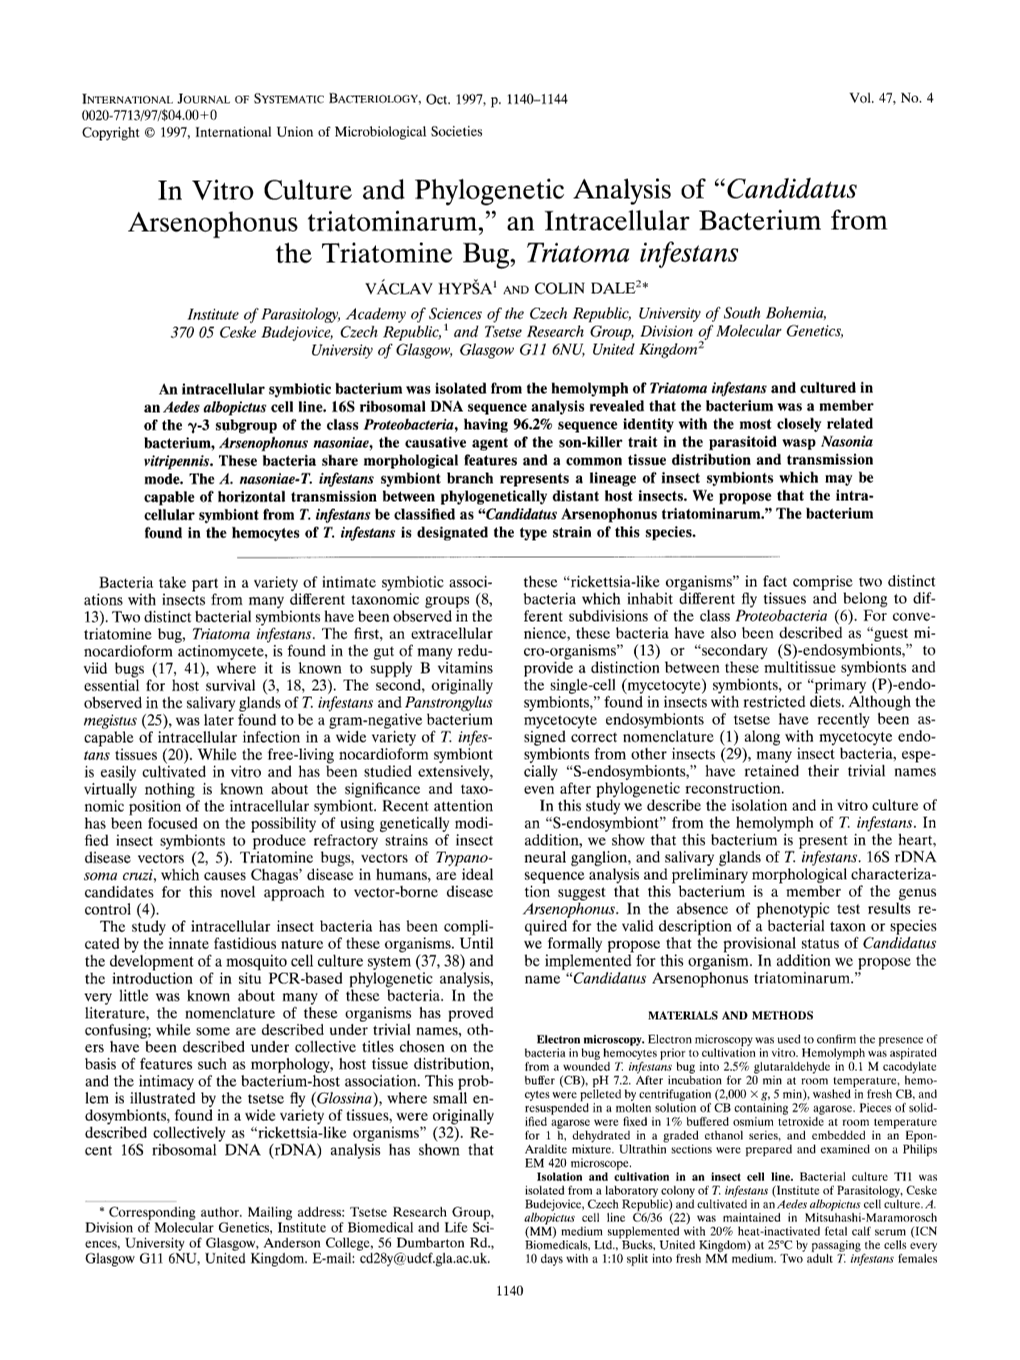 Candidatus Arsenophonus Triatominarum,” an Intracellular Bacterium from the Triatomine Bug, Triatoma Infestans